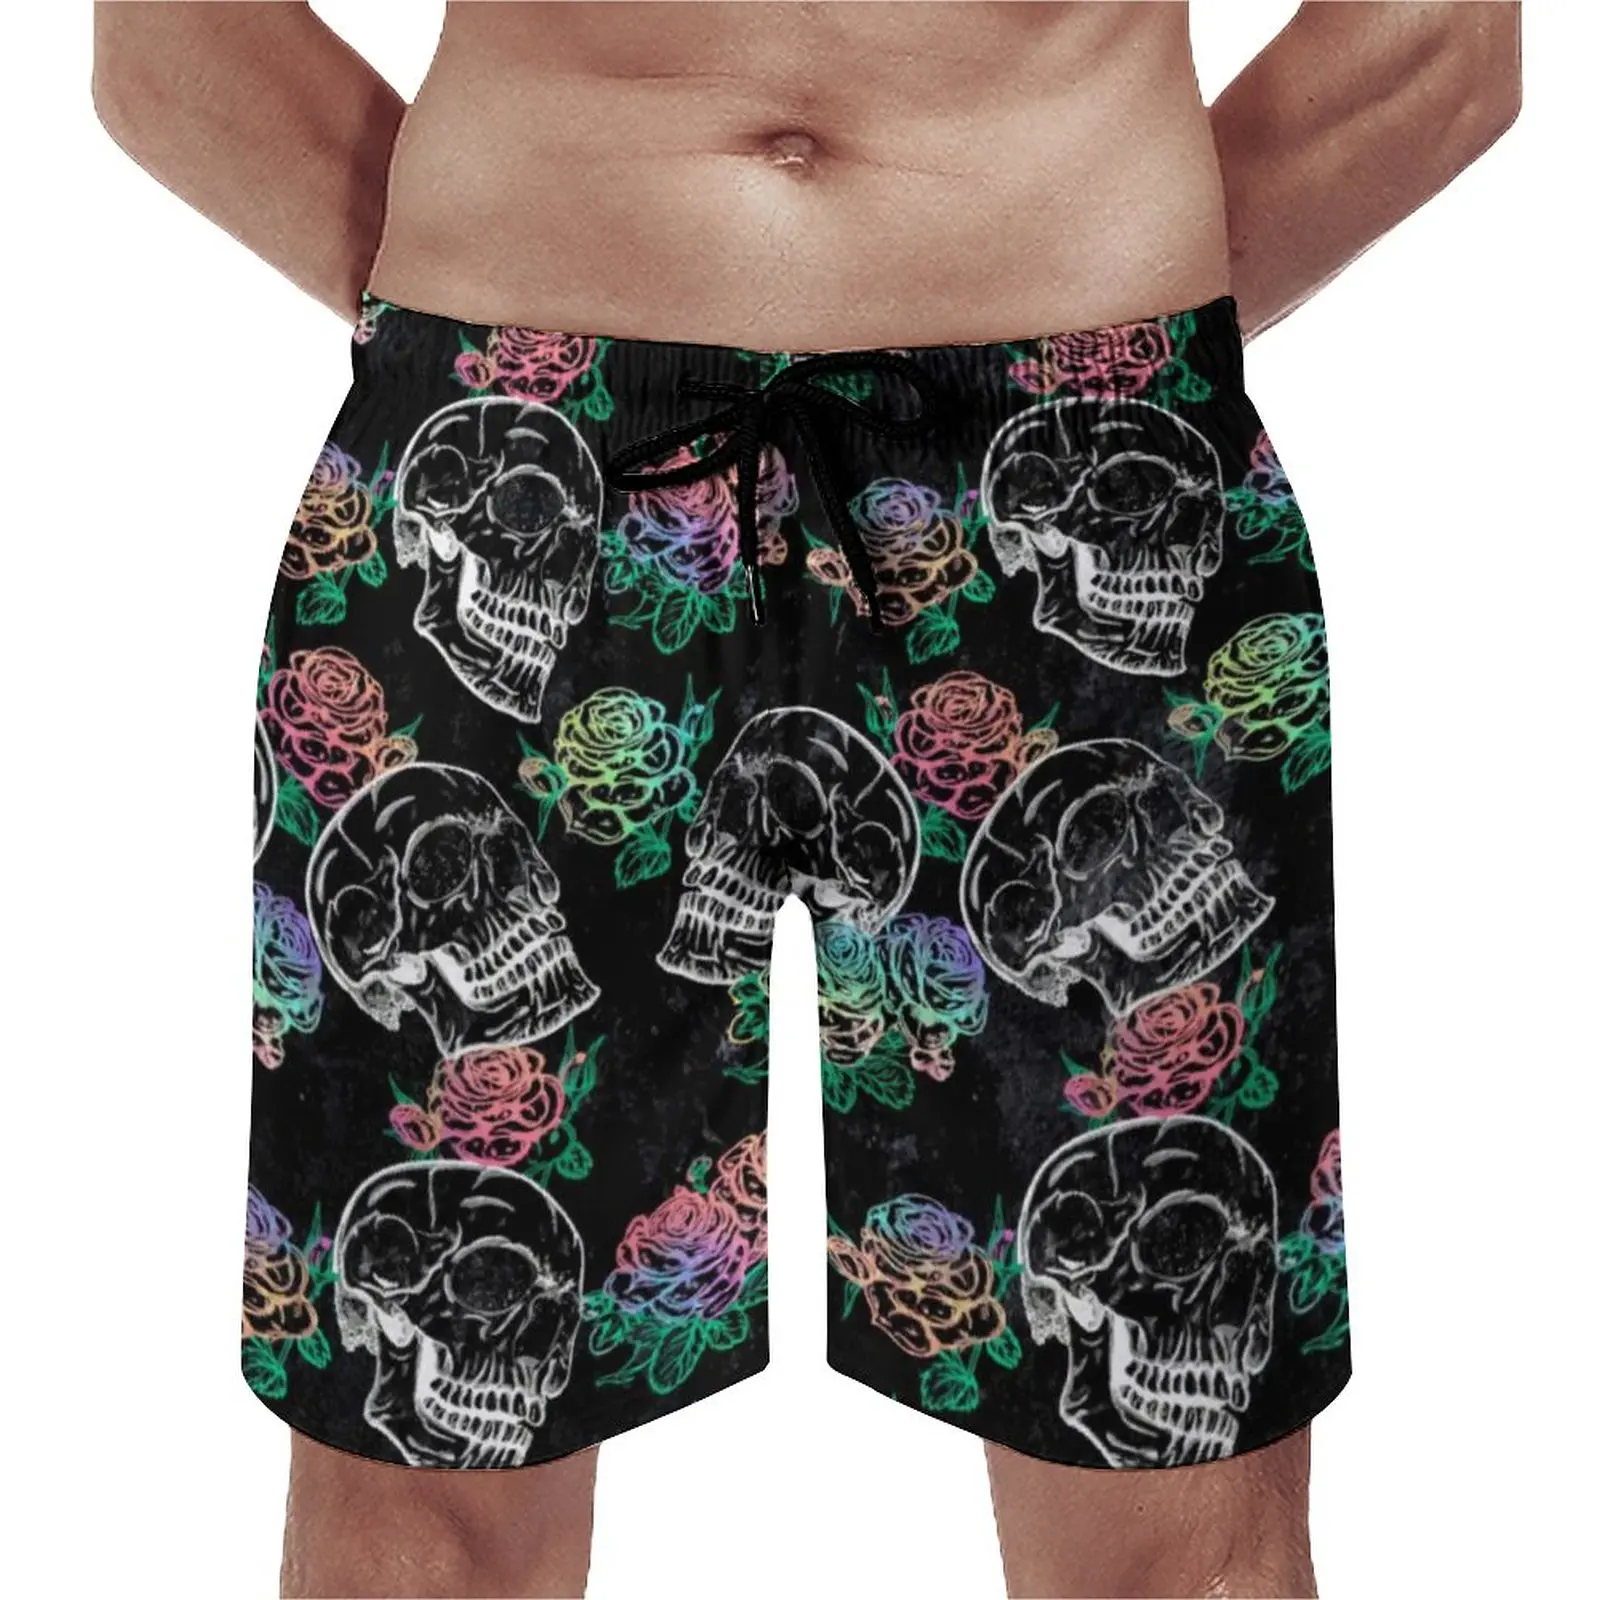 

Sugar Skull Board Shorts Summer Ombre Roses Print Hawaii Beach Shorts Men Sports Fitness Fast Dry Design Swim Trunks